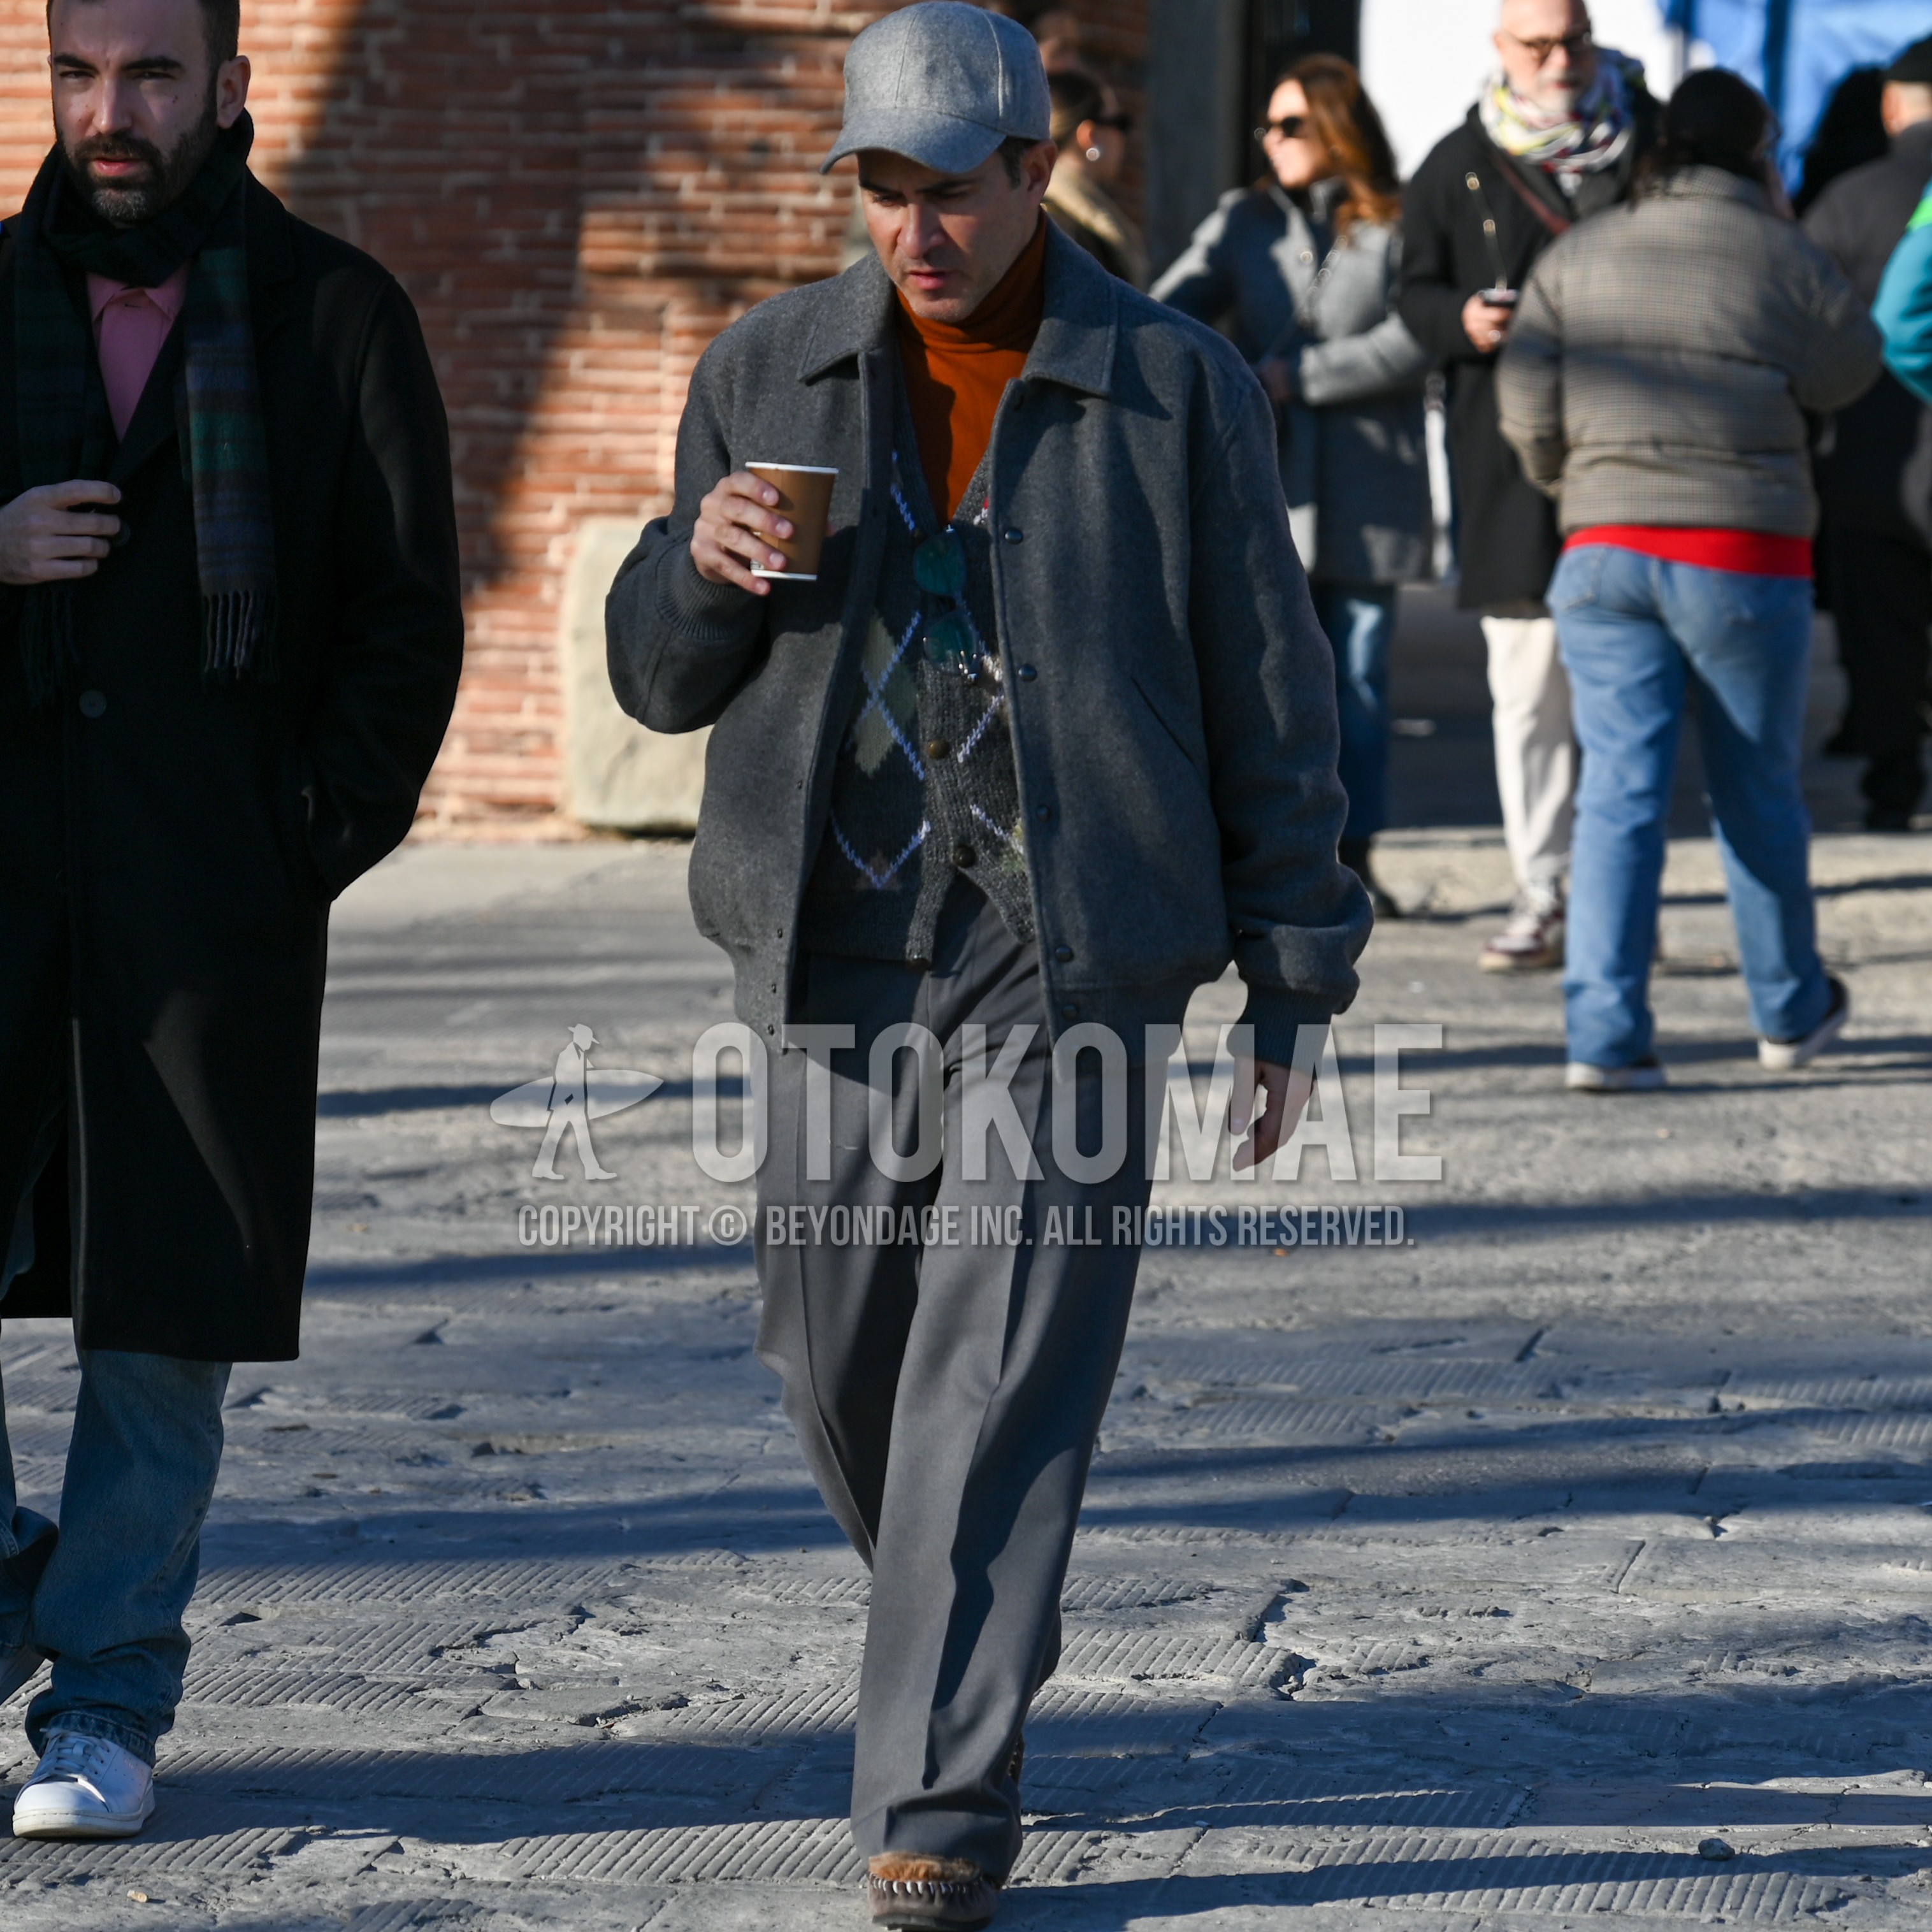 Men's winter outfit with gray plain baseball cap, gray plain stadium jacket, gray tops/innerwear cardigan, orange plain t-shirt, gray plain slacks, brown moccasins/deck shoes leather shoes.